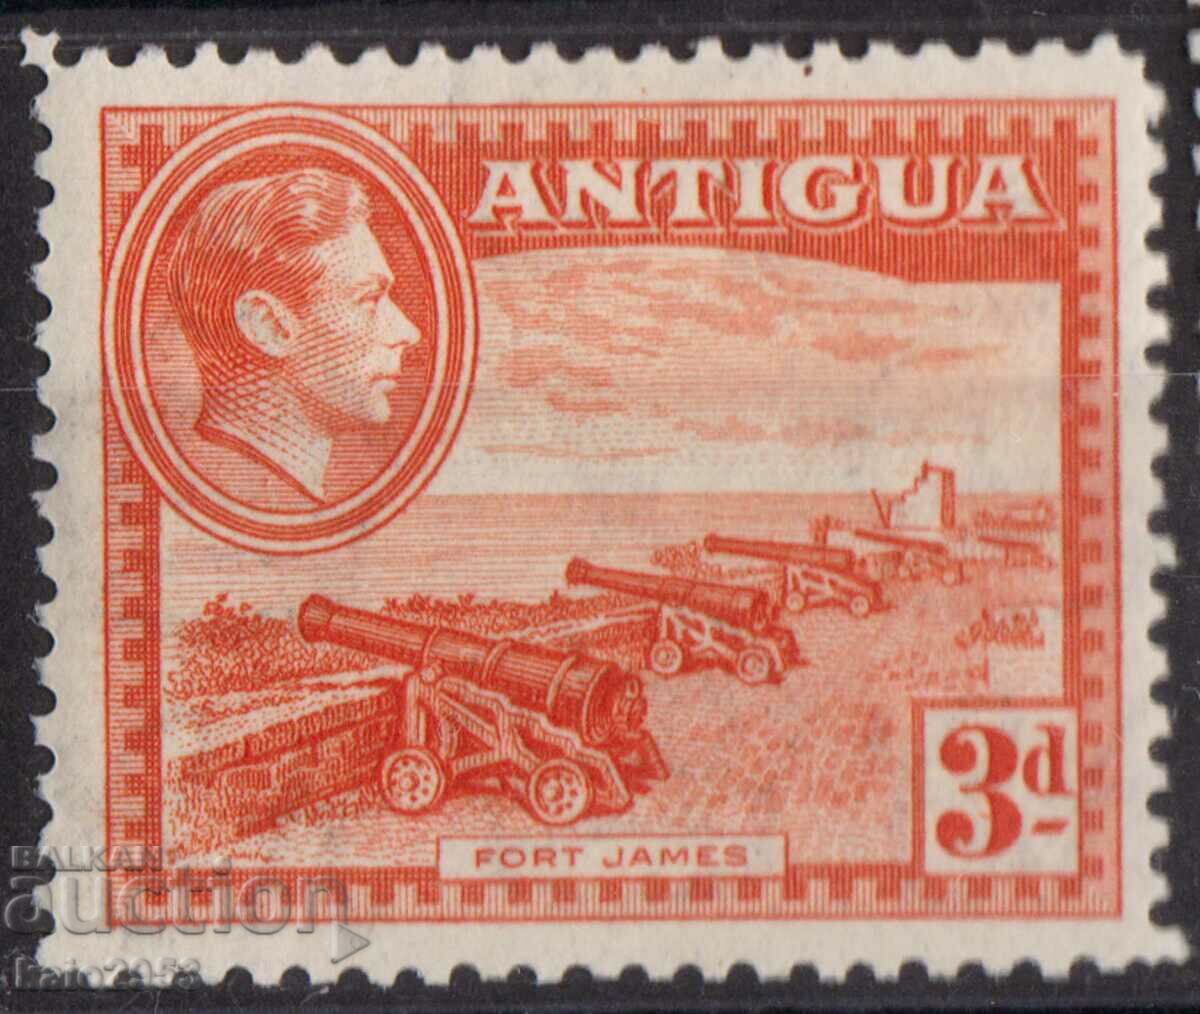 GB/Antigua-1938-KG VI-oval+views,MNH